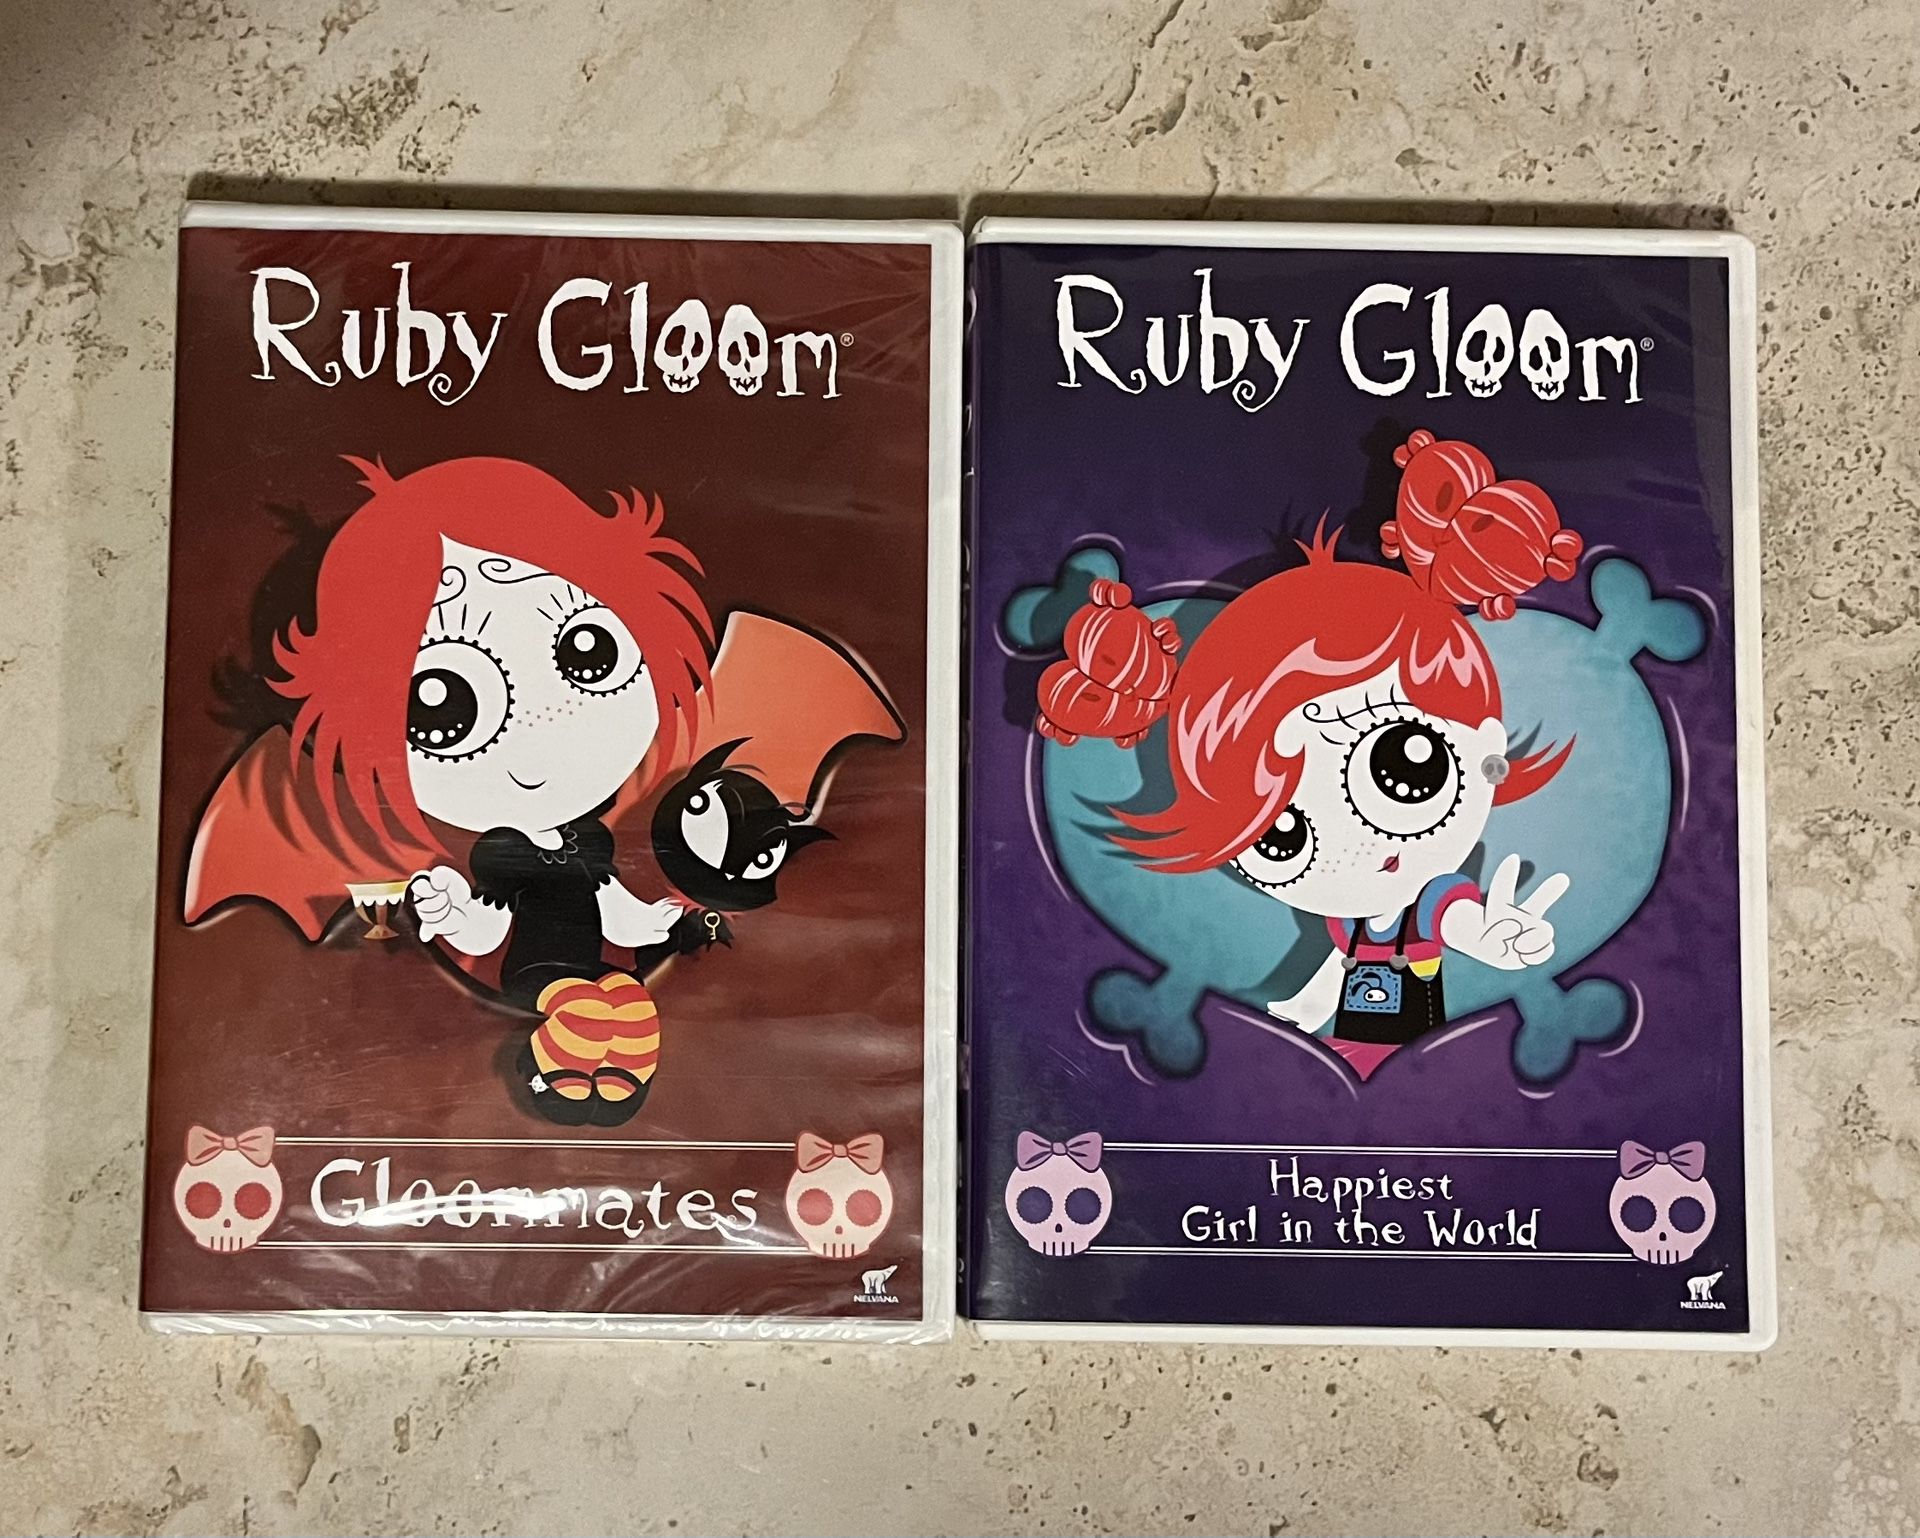 RUBY GLOOM DVD’s For Halloween 